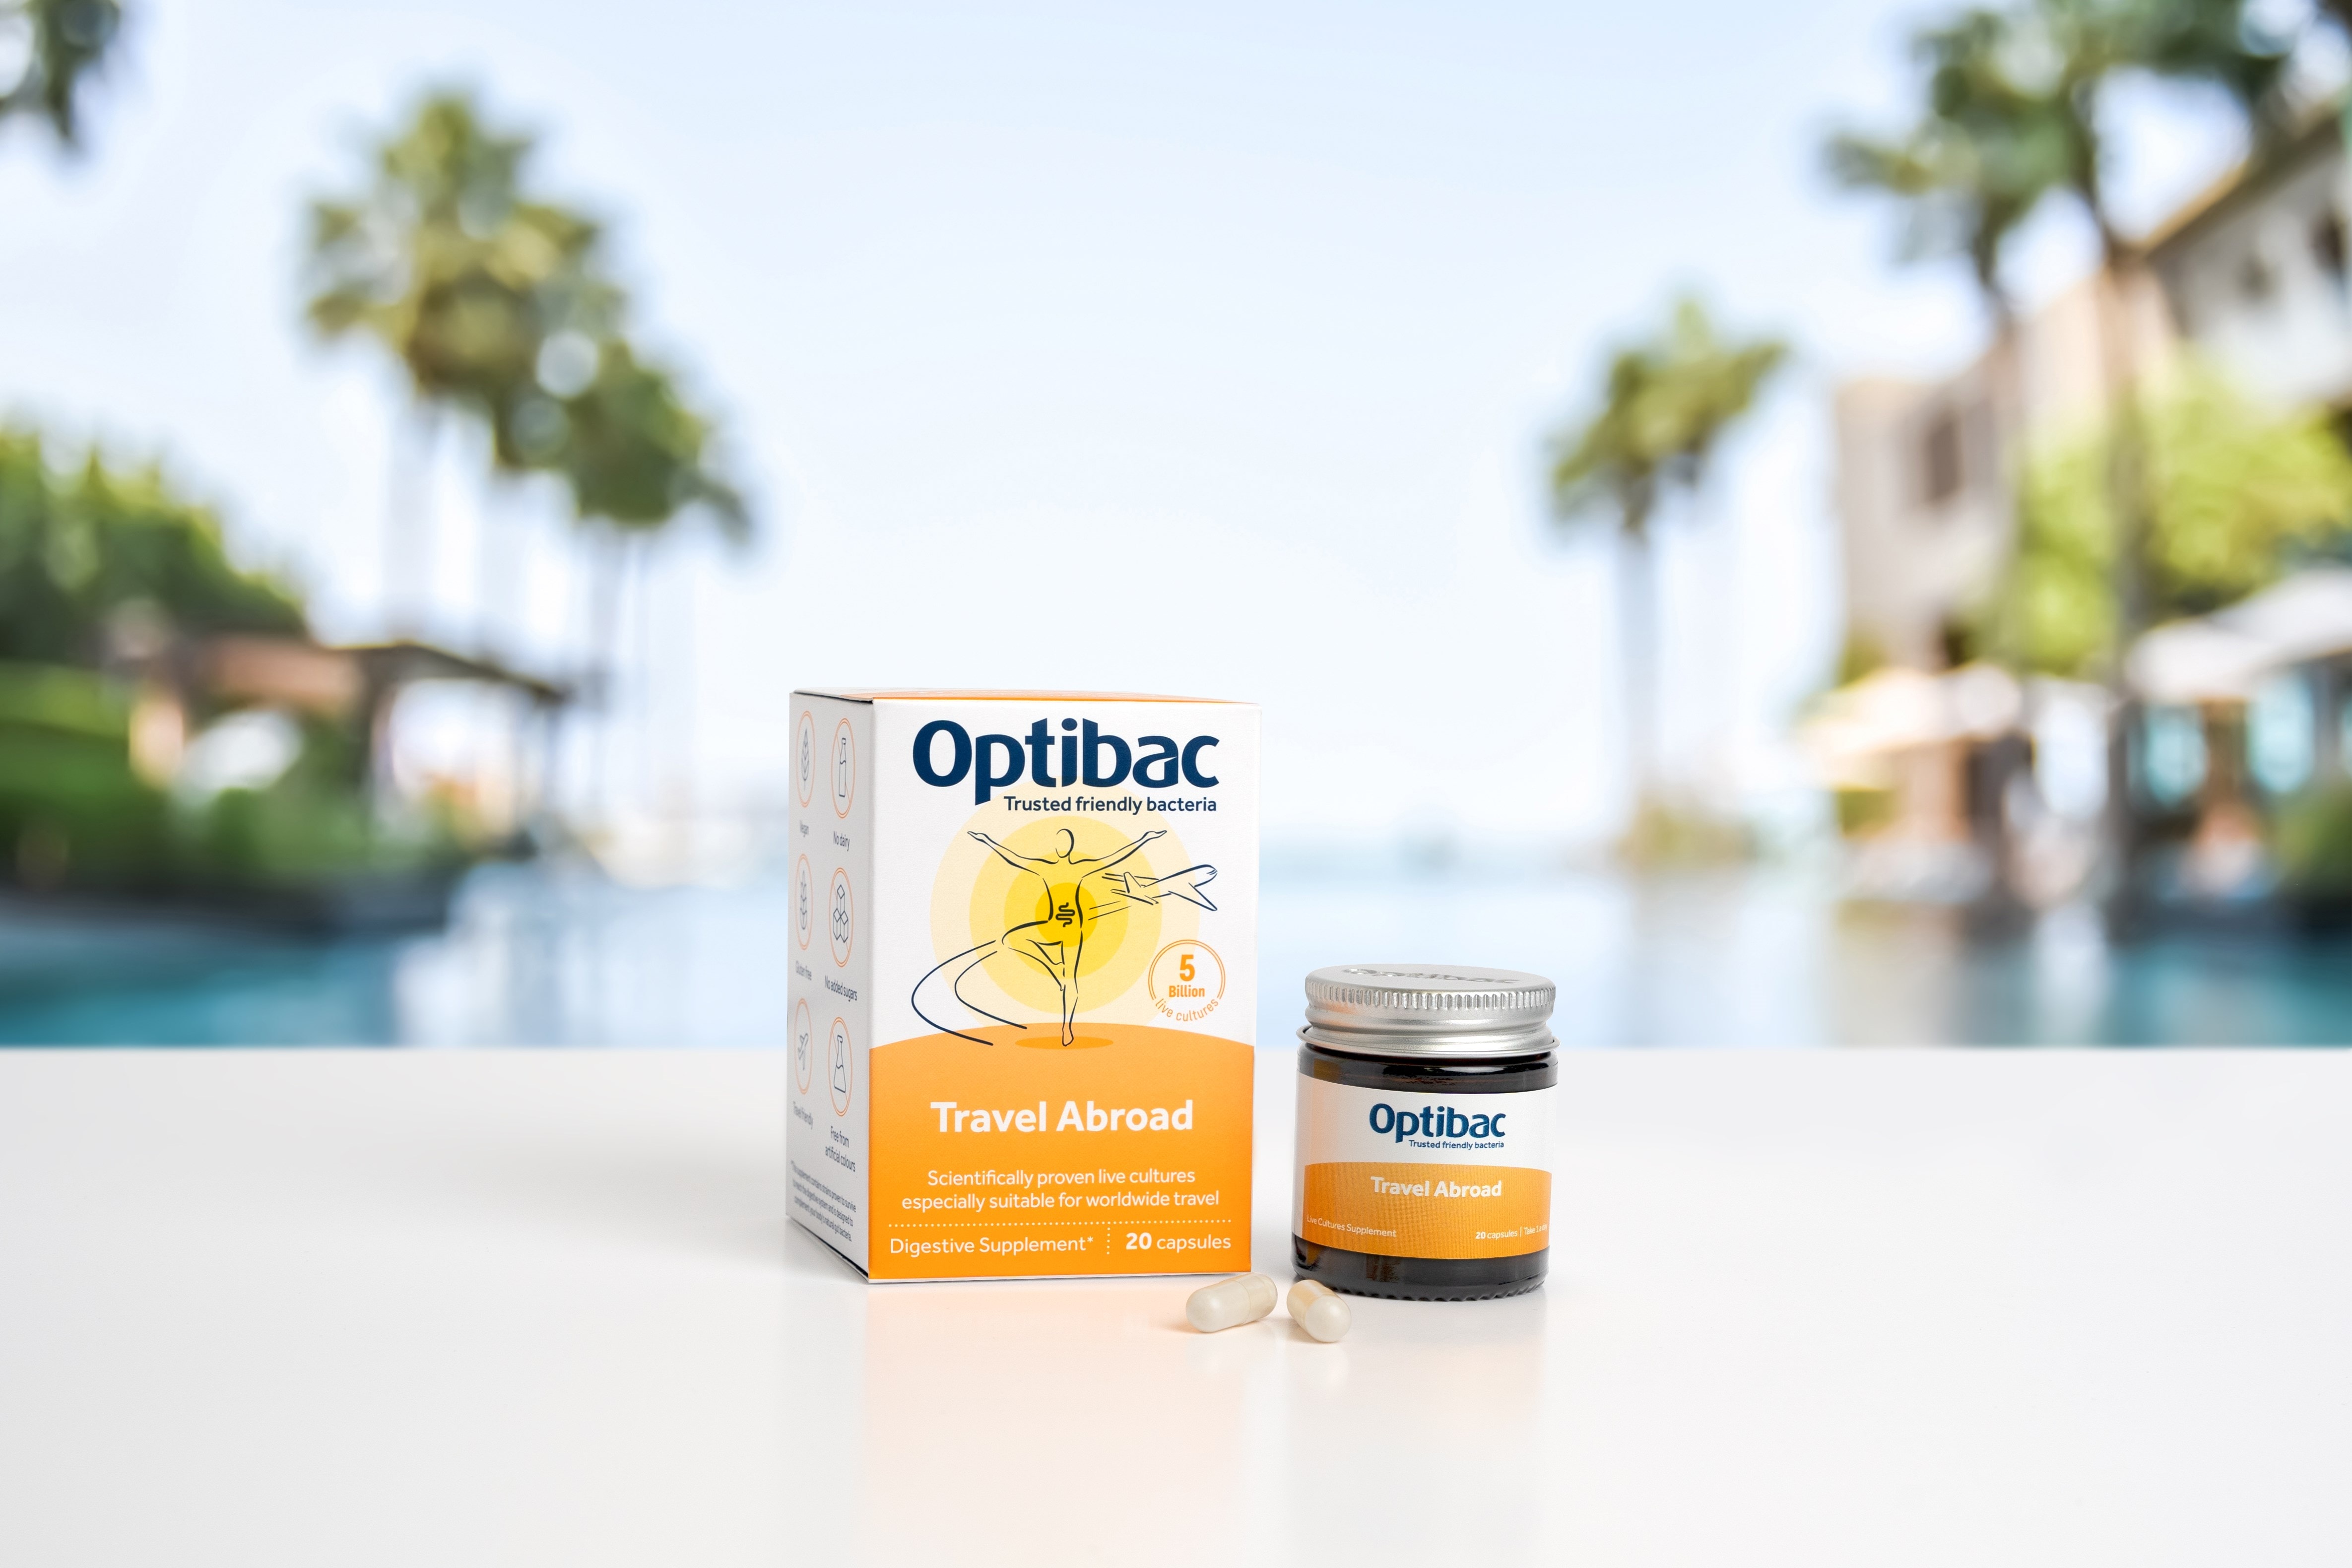 Optibac Travel Abroad supplement